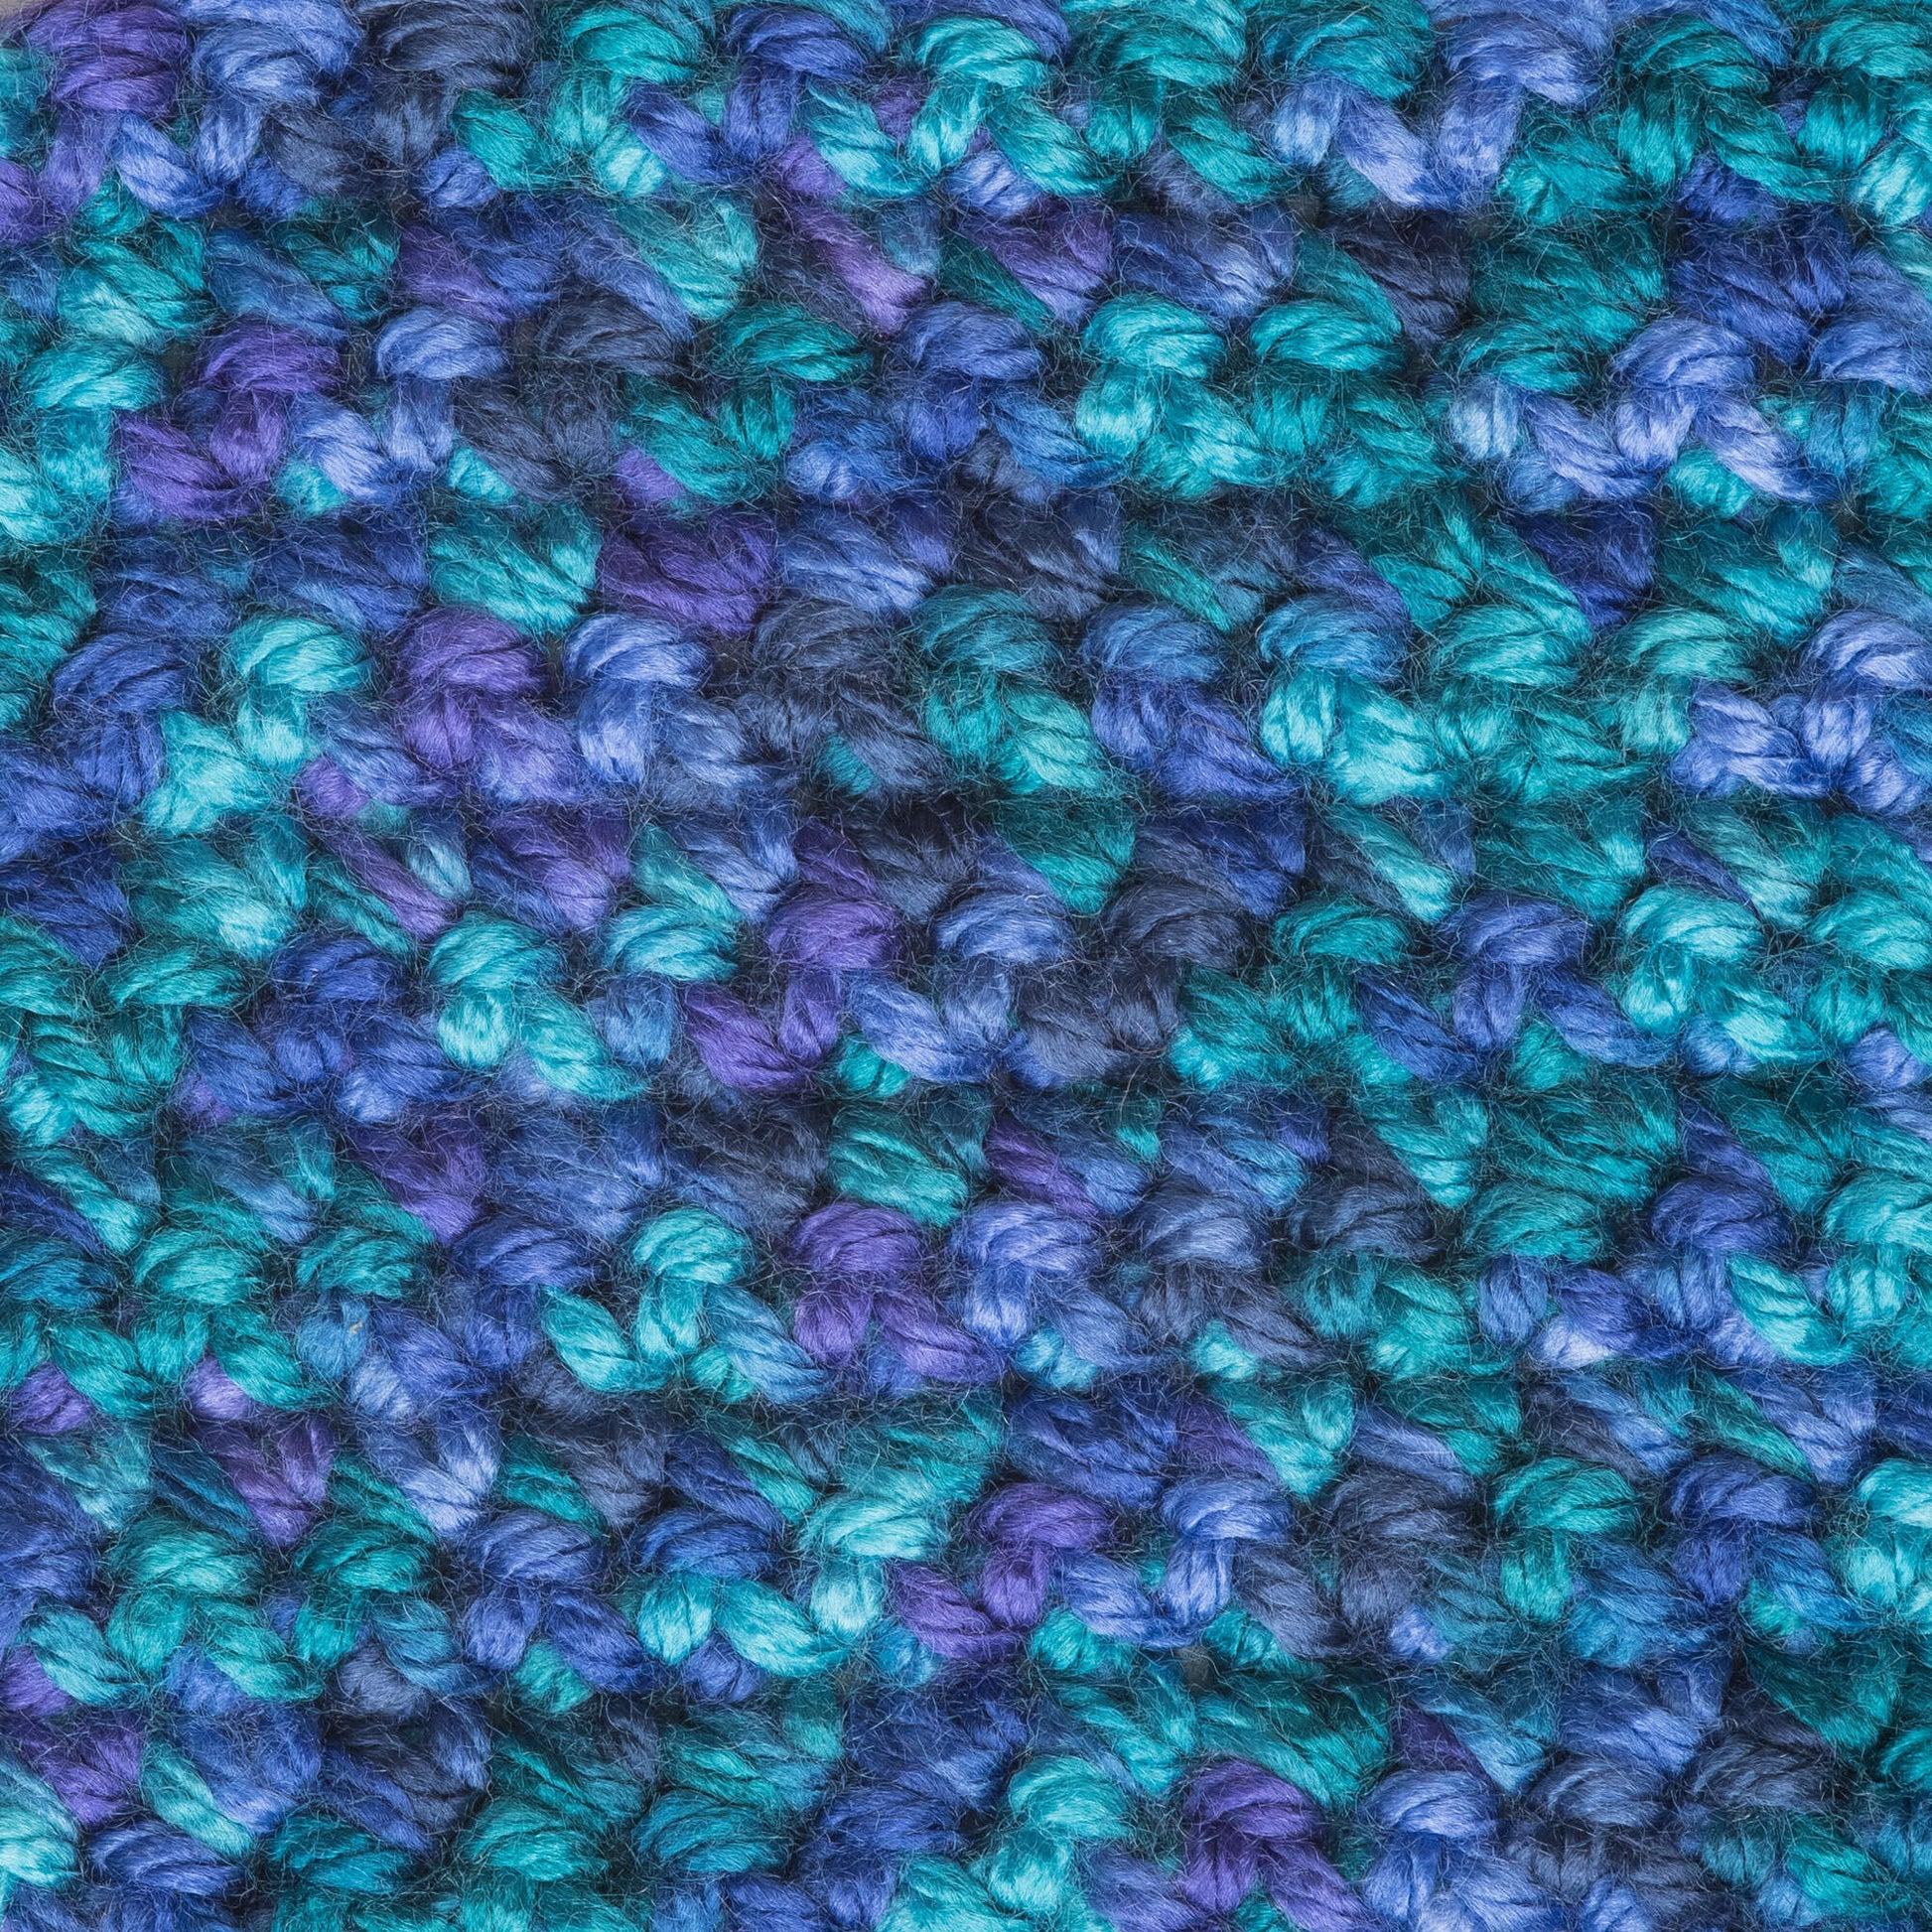 Caron Simply Soft Rose Garden Paints Yarn - 3 Pack of 141g/5oz - Acrylic -  4 Medium (Worsted) - 235 Yards - Knitting/Crochet